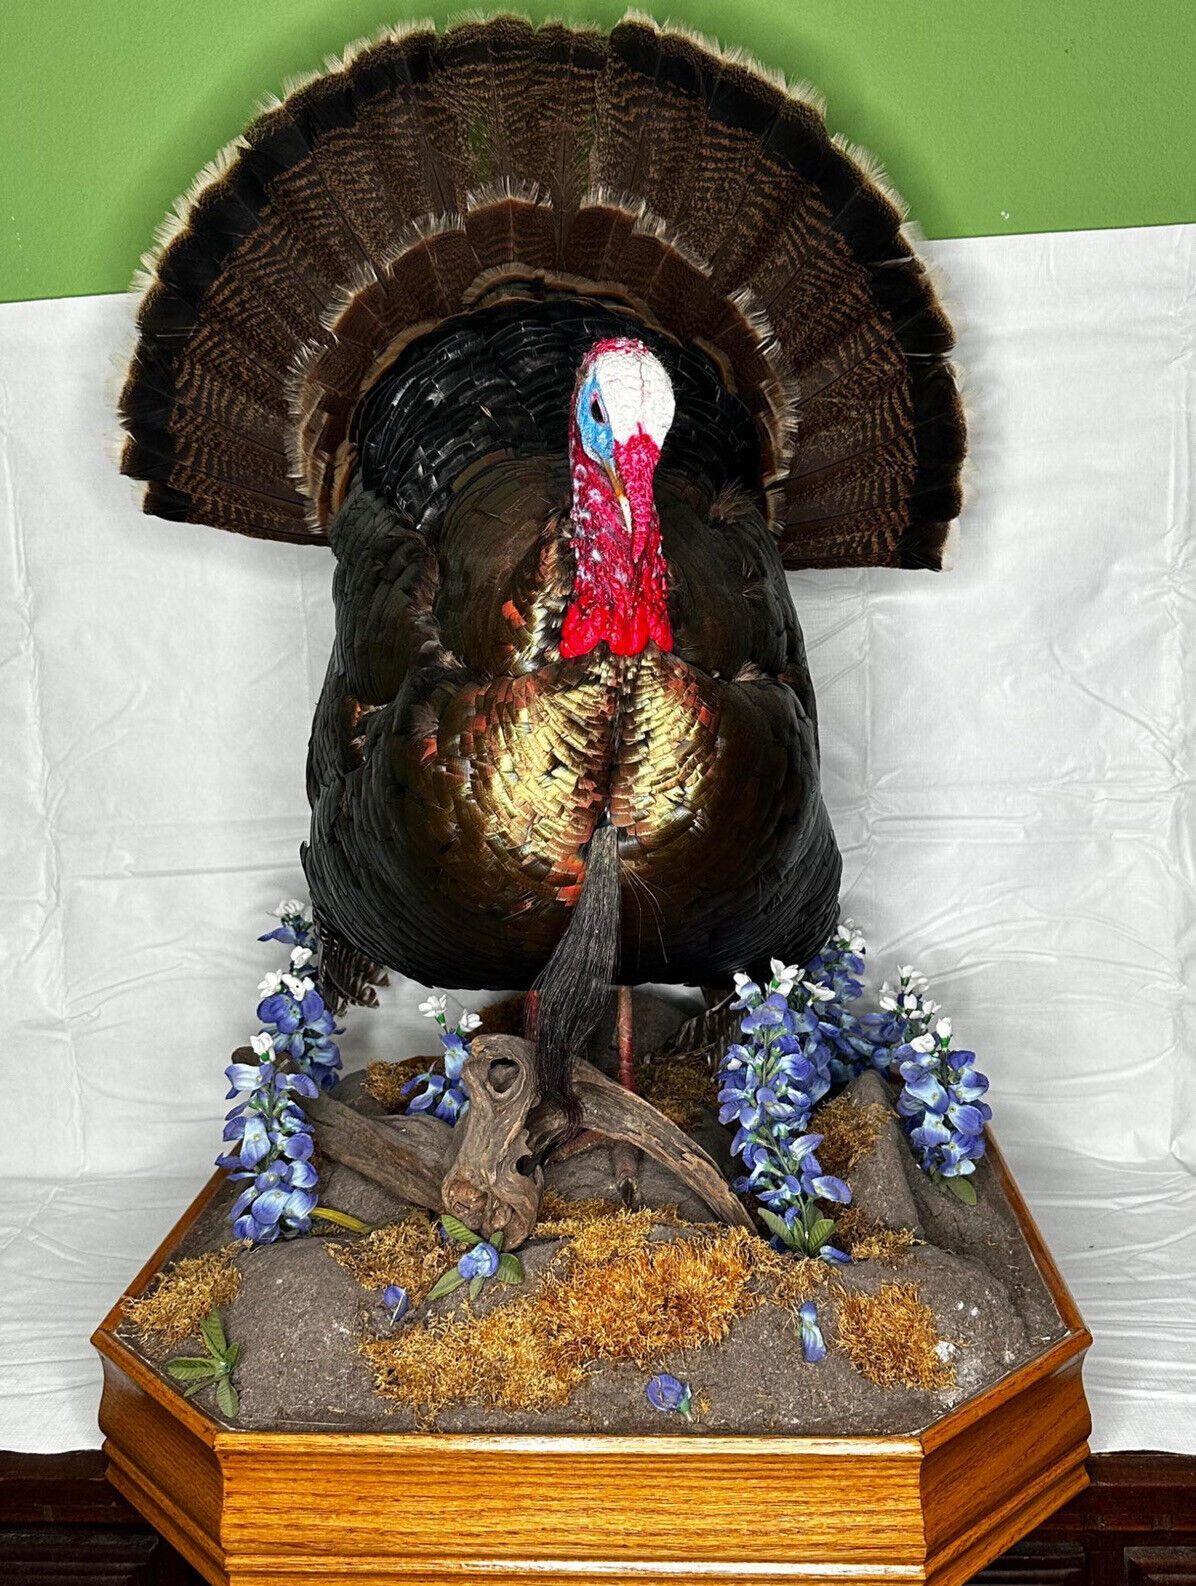 Museum Quality Mounted Taxidermy Turkey W/ Custom Base